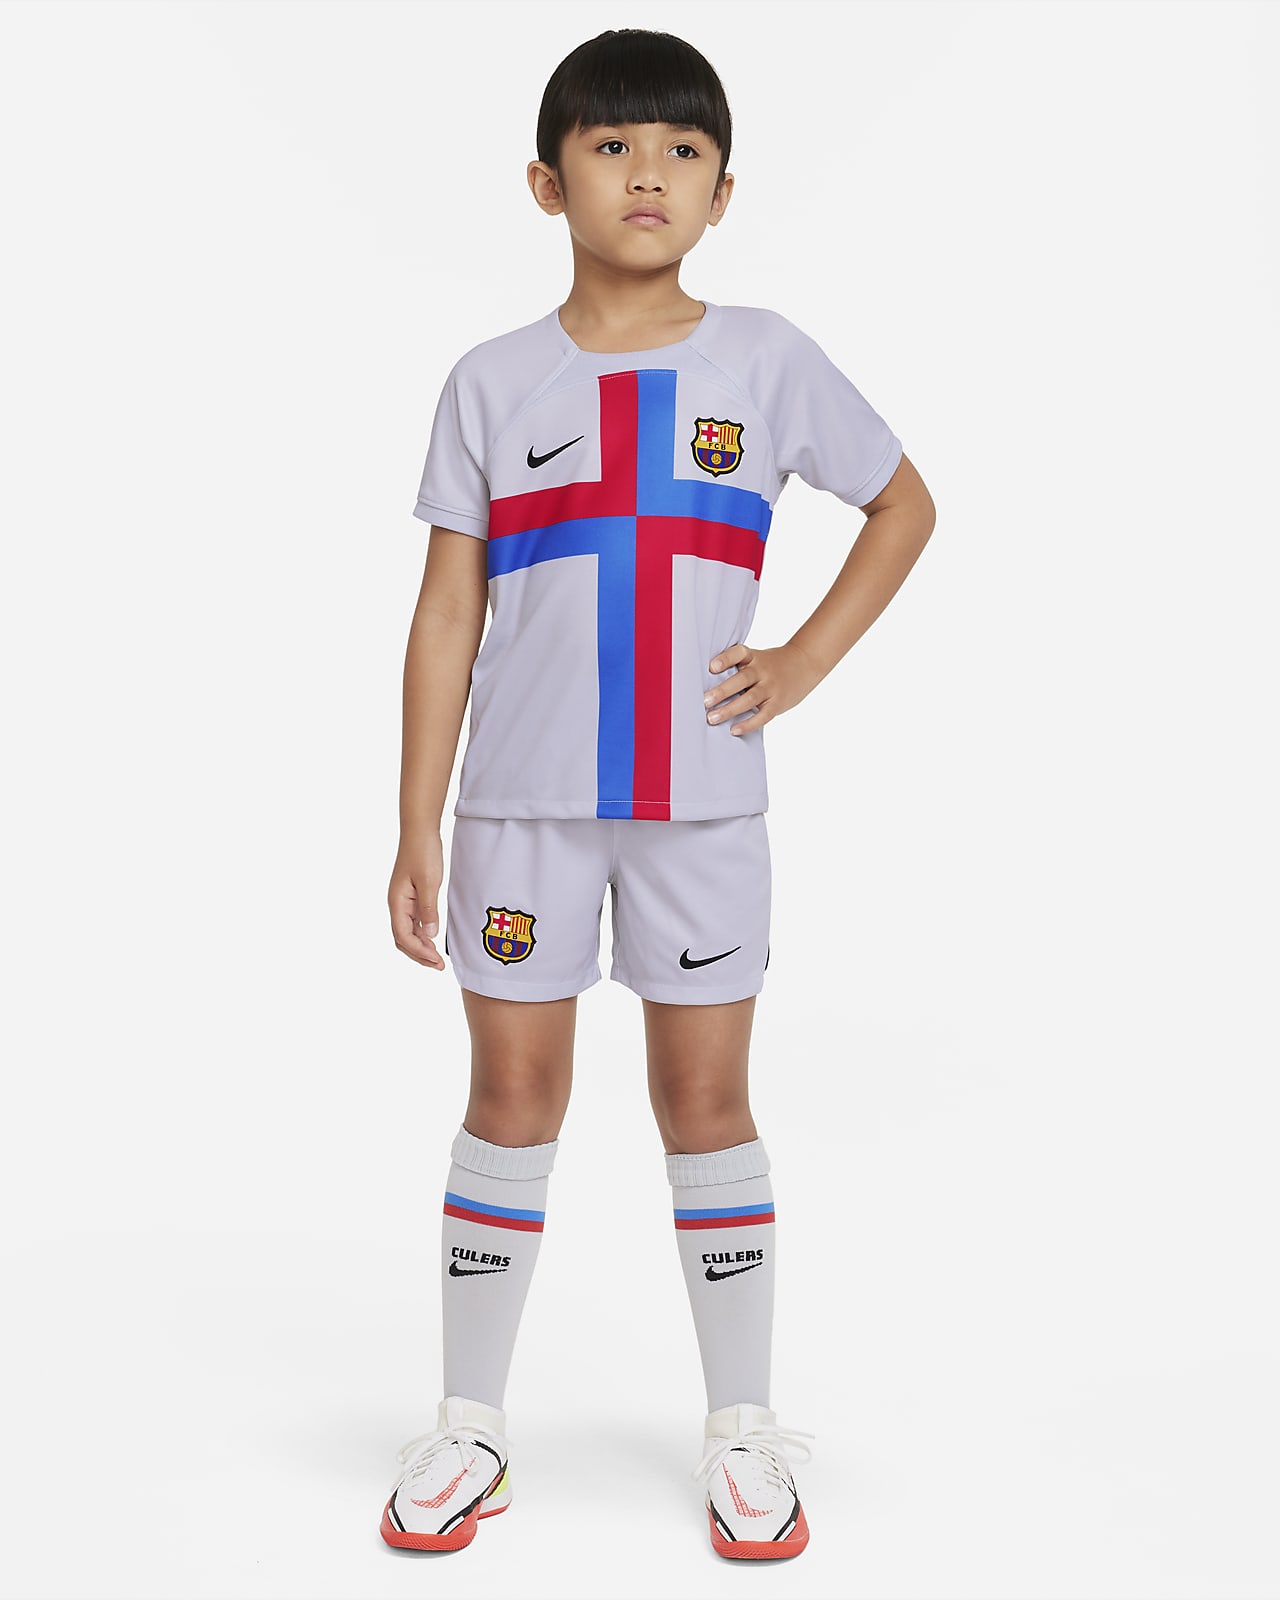 F.C. Barcelona 2022/23 Third Younger Kids' Nike Football Kit